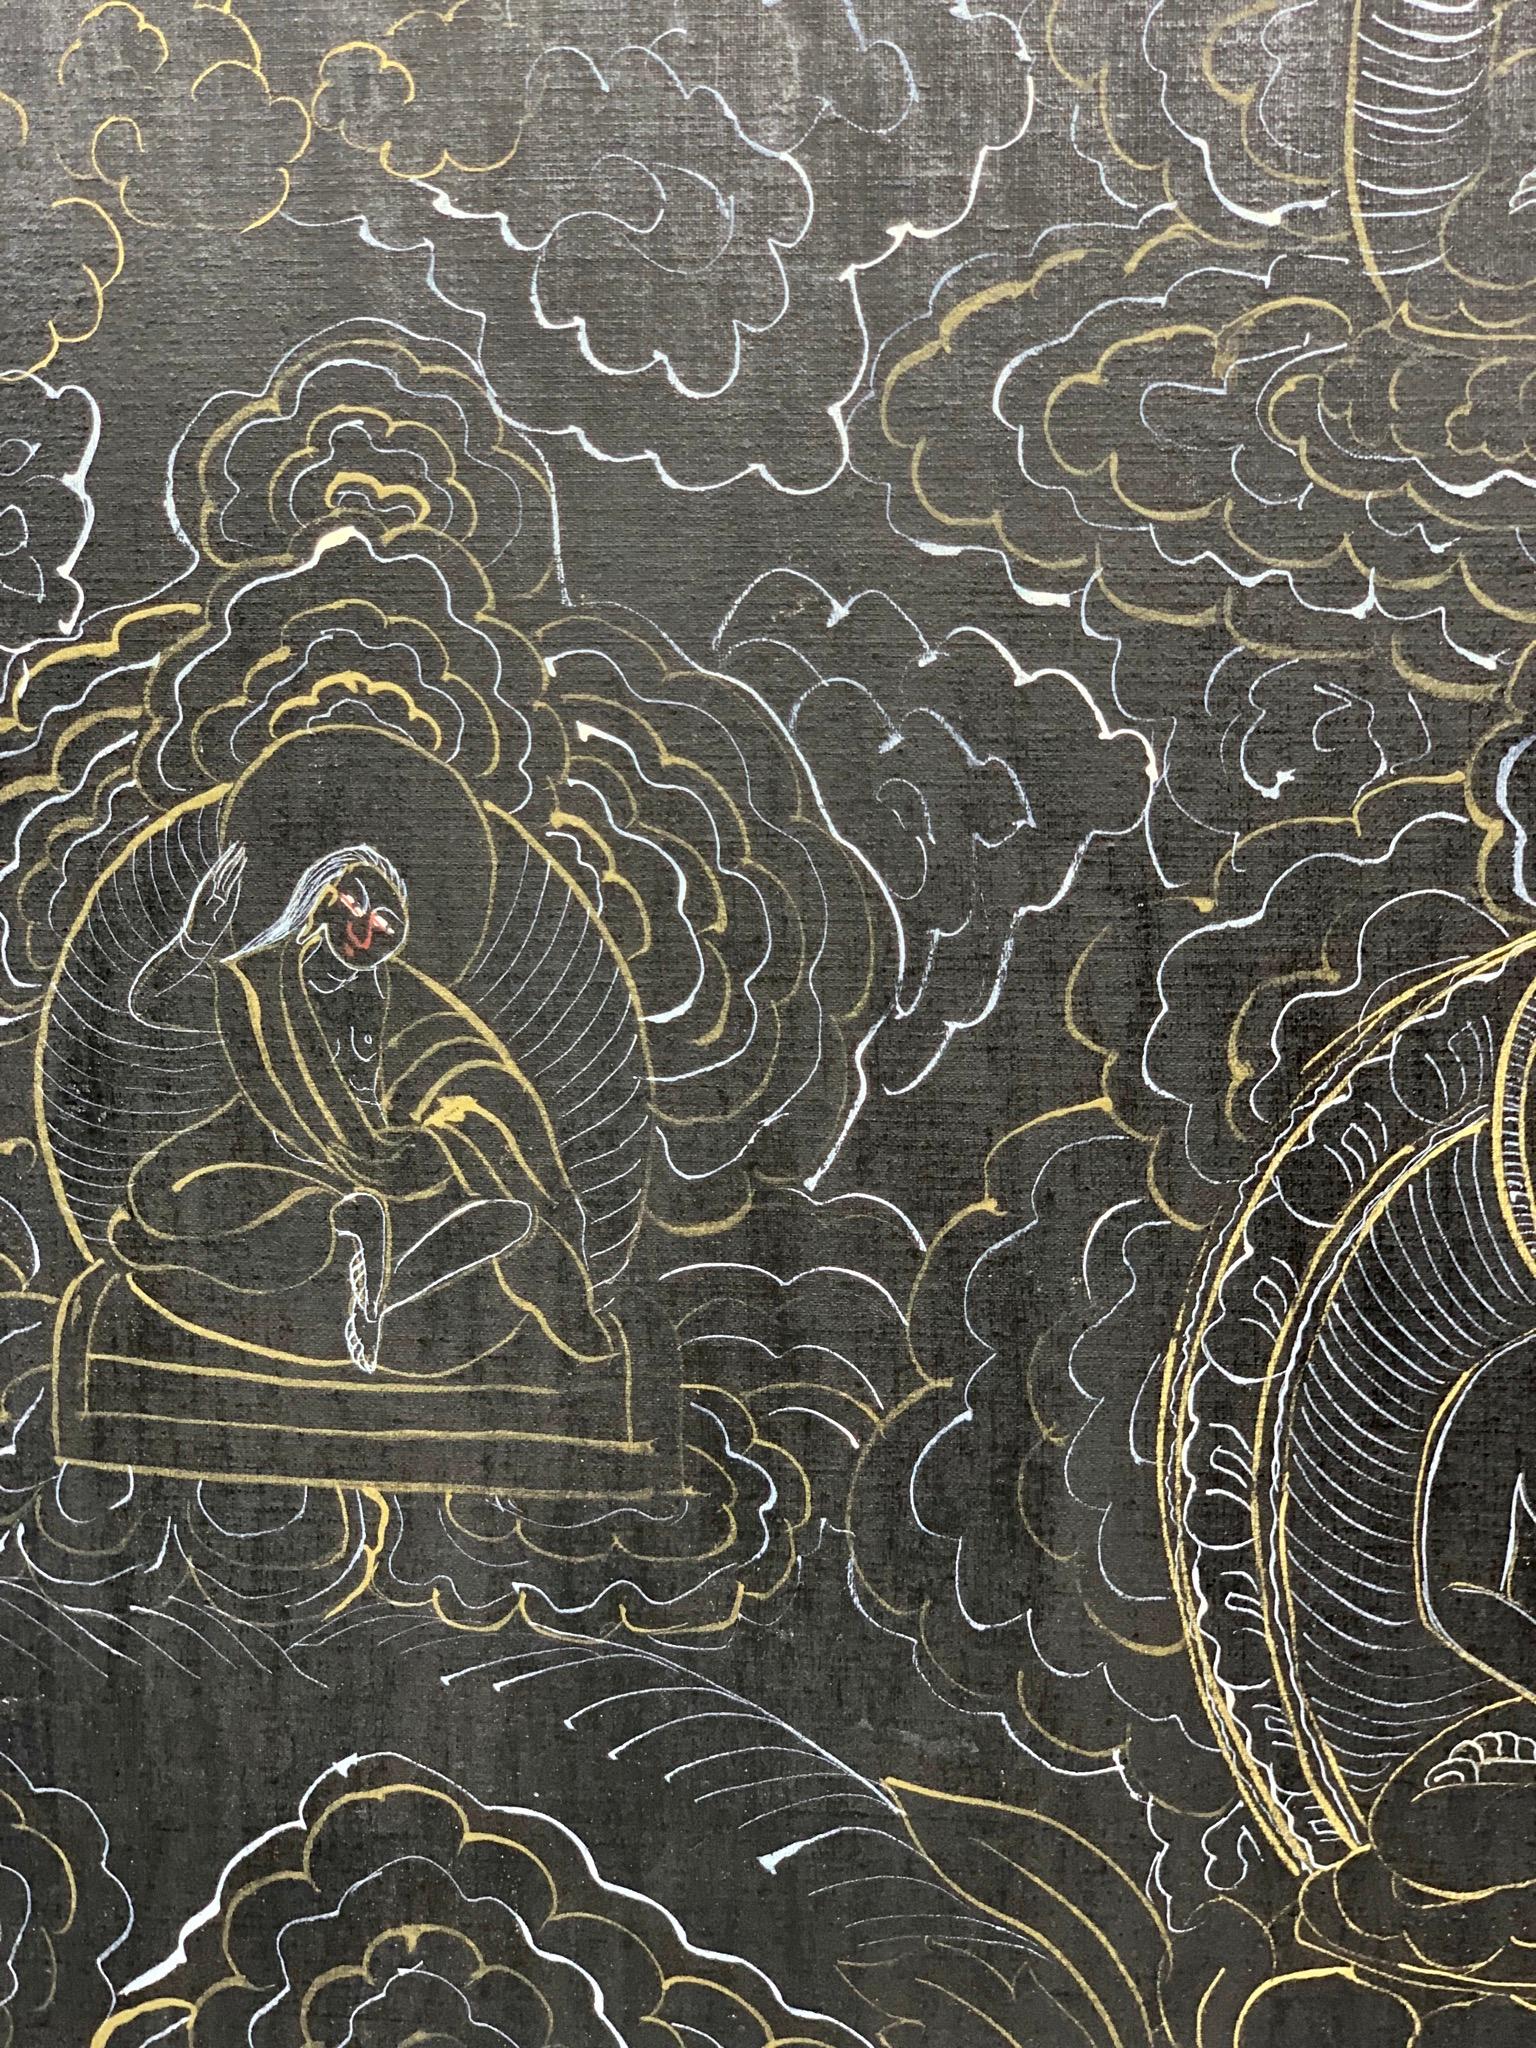 Black and White Chinese Mandala with Scenes of Buddha 1